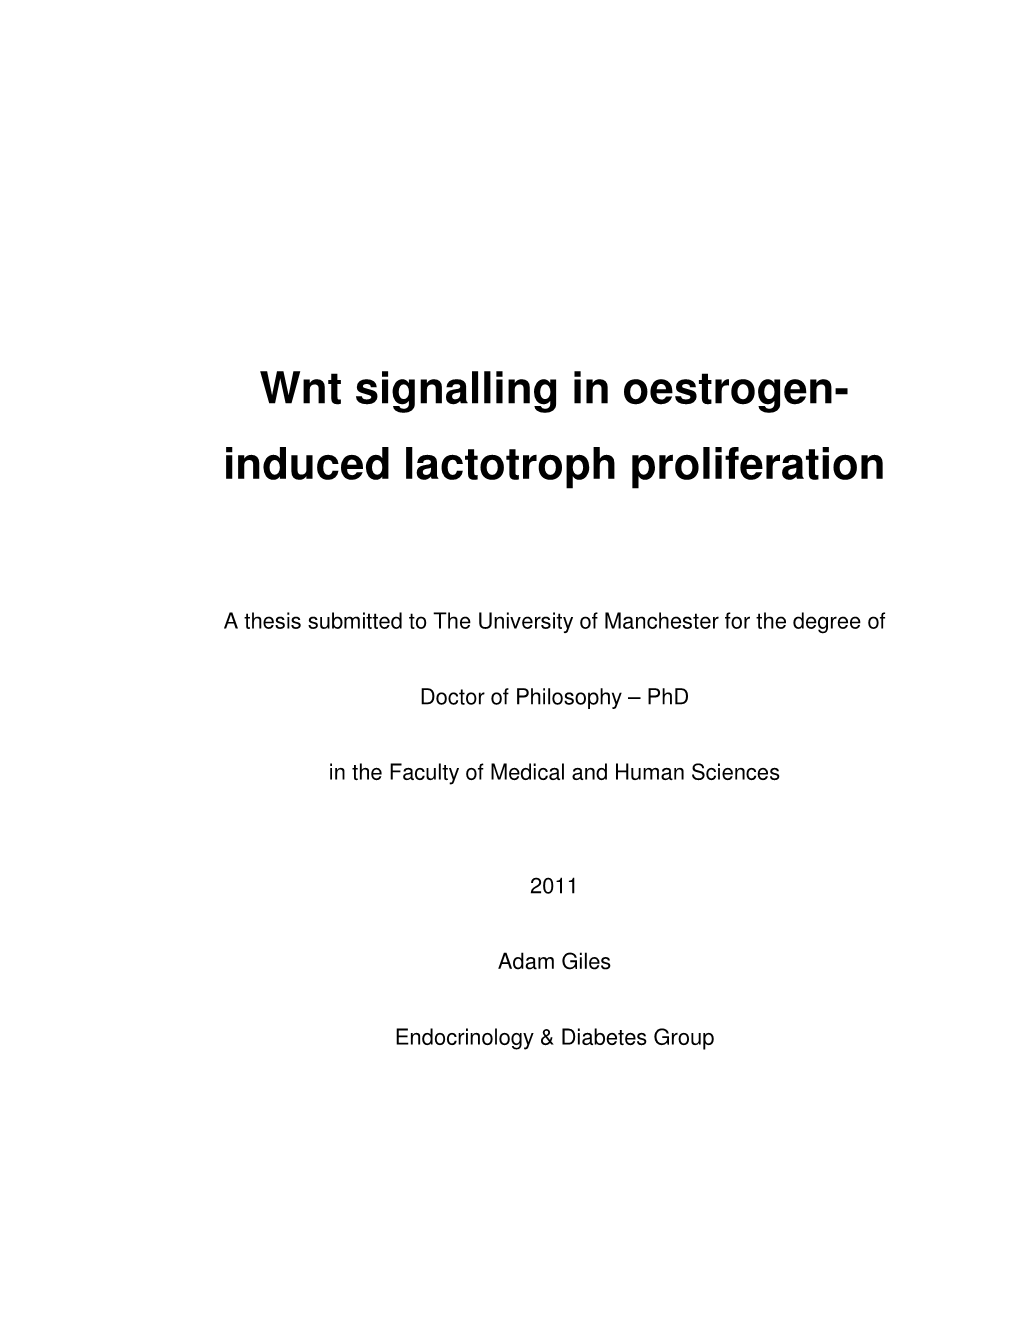 Wnt Signalling in Oestrogen- Induced Lactotroph Proliferation